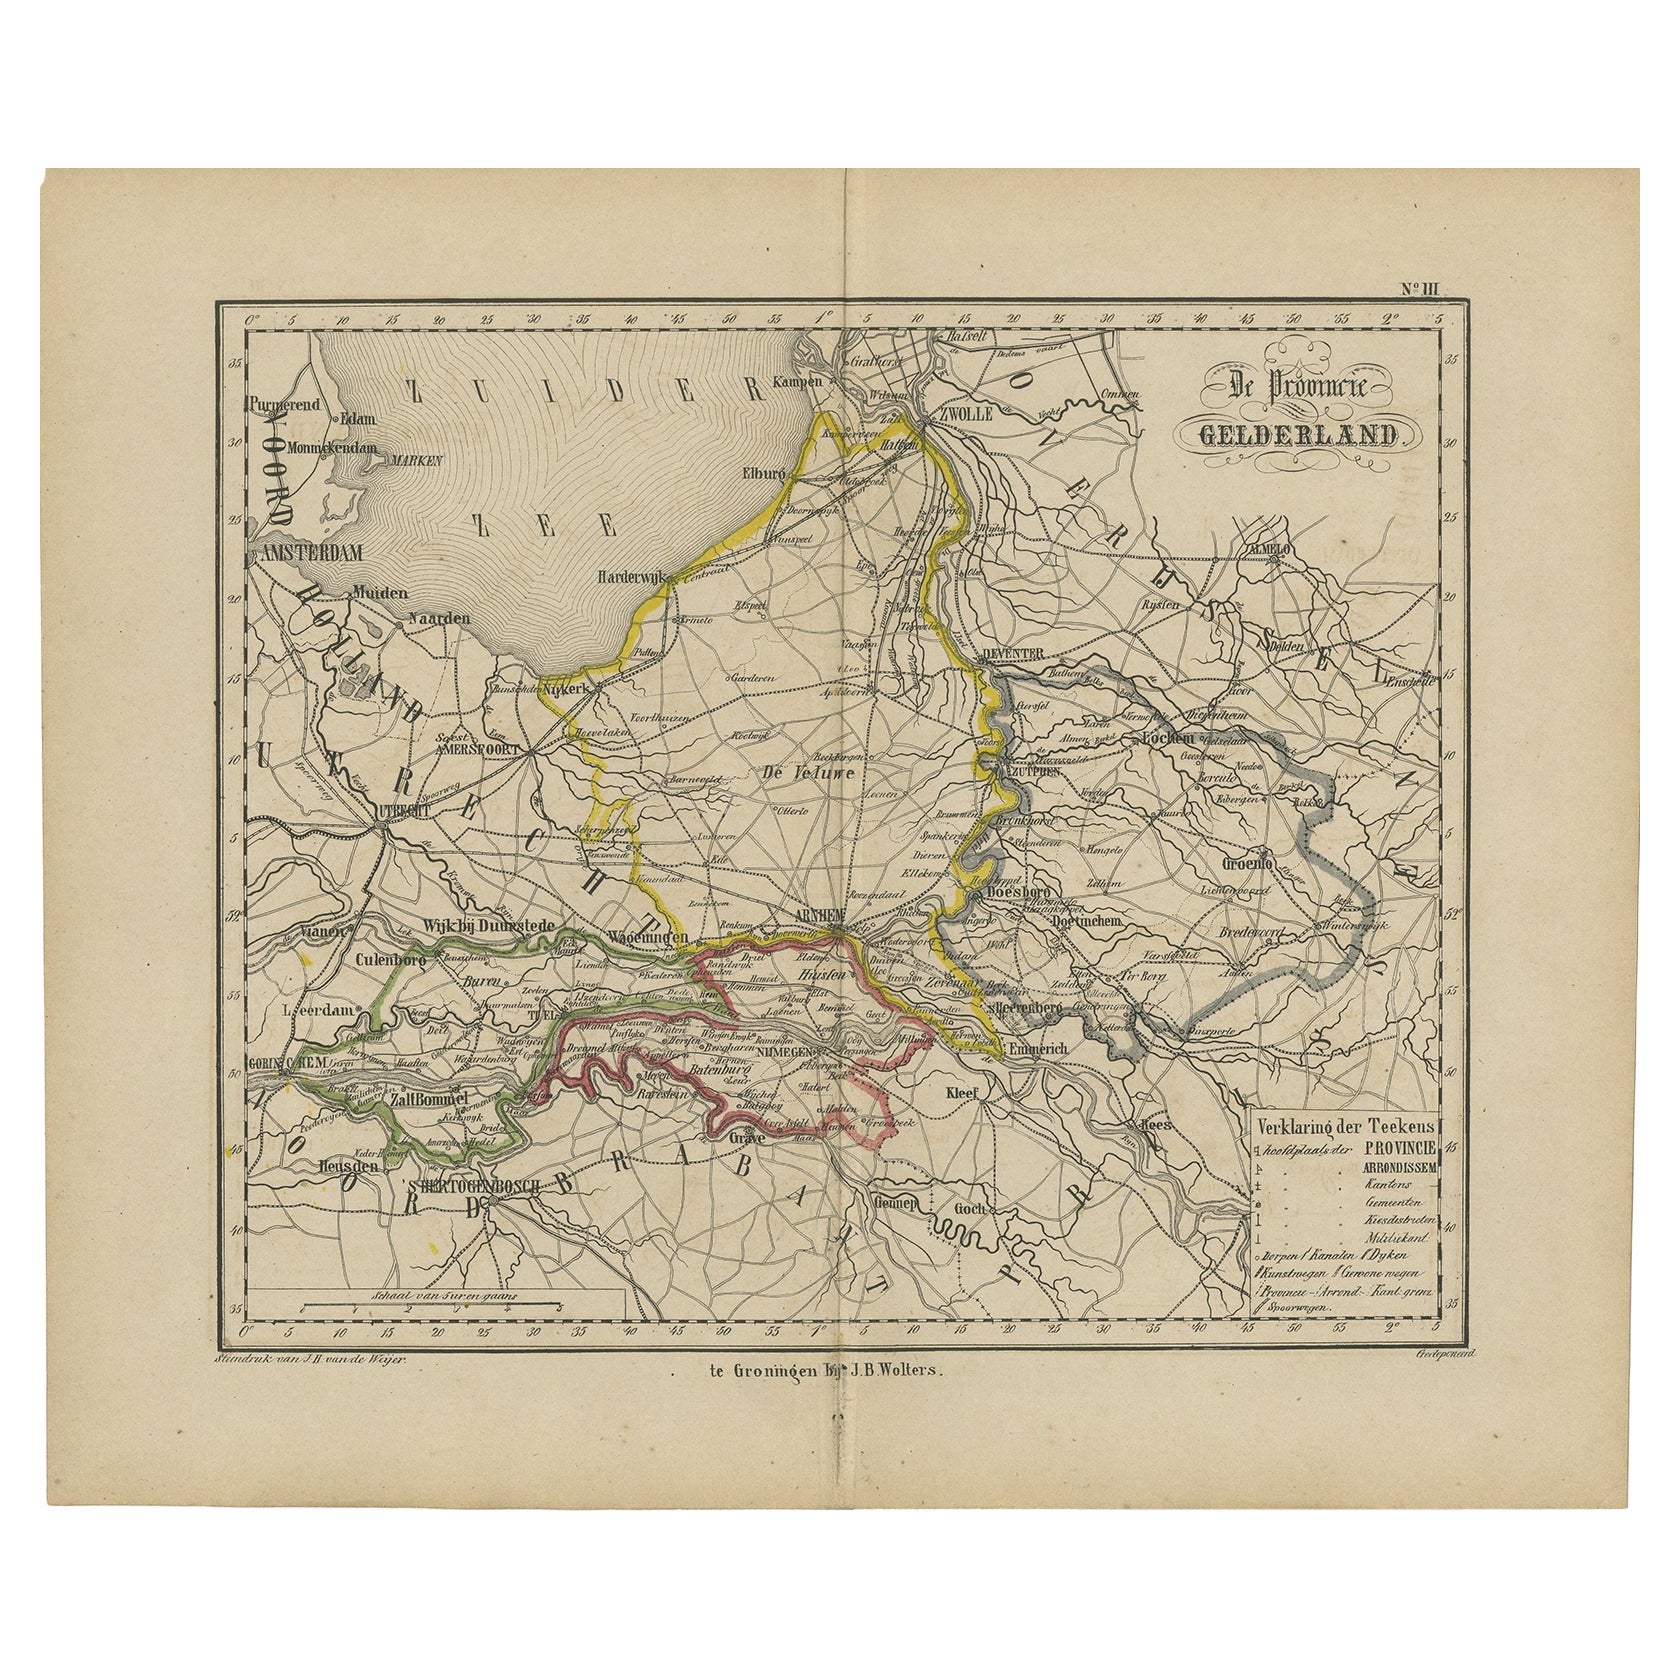 Antique Map of Gelderland with the Veluwe Etc, the Netherlands, 1864